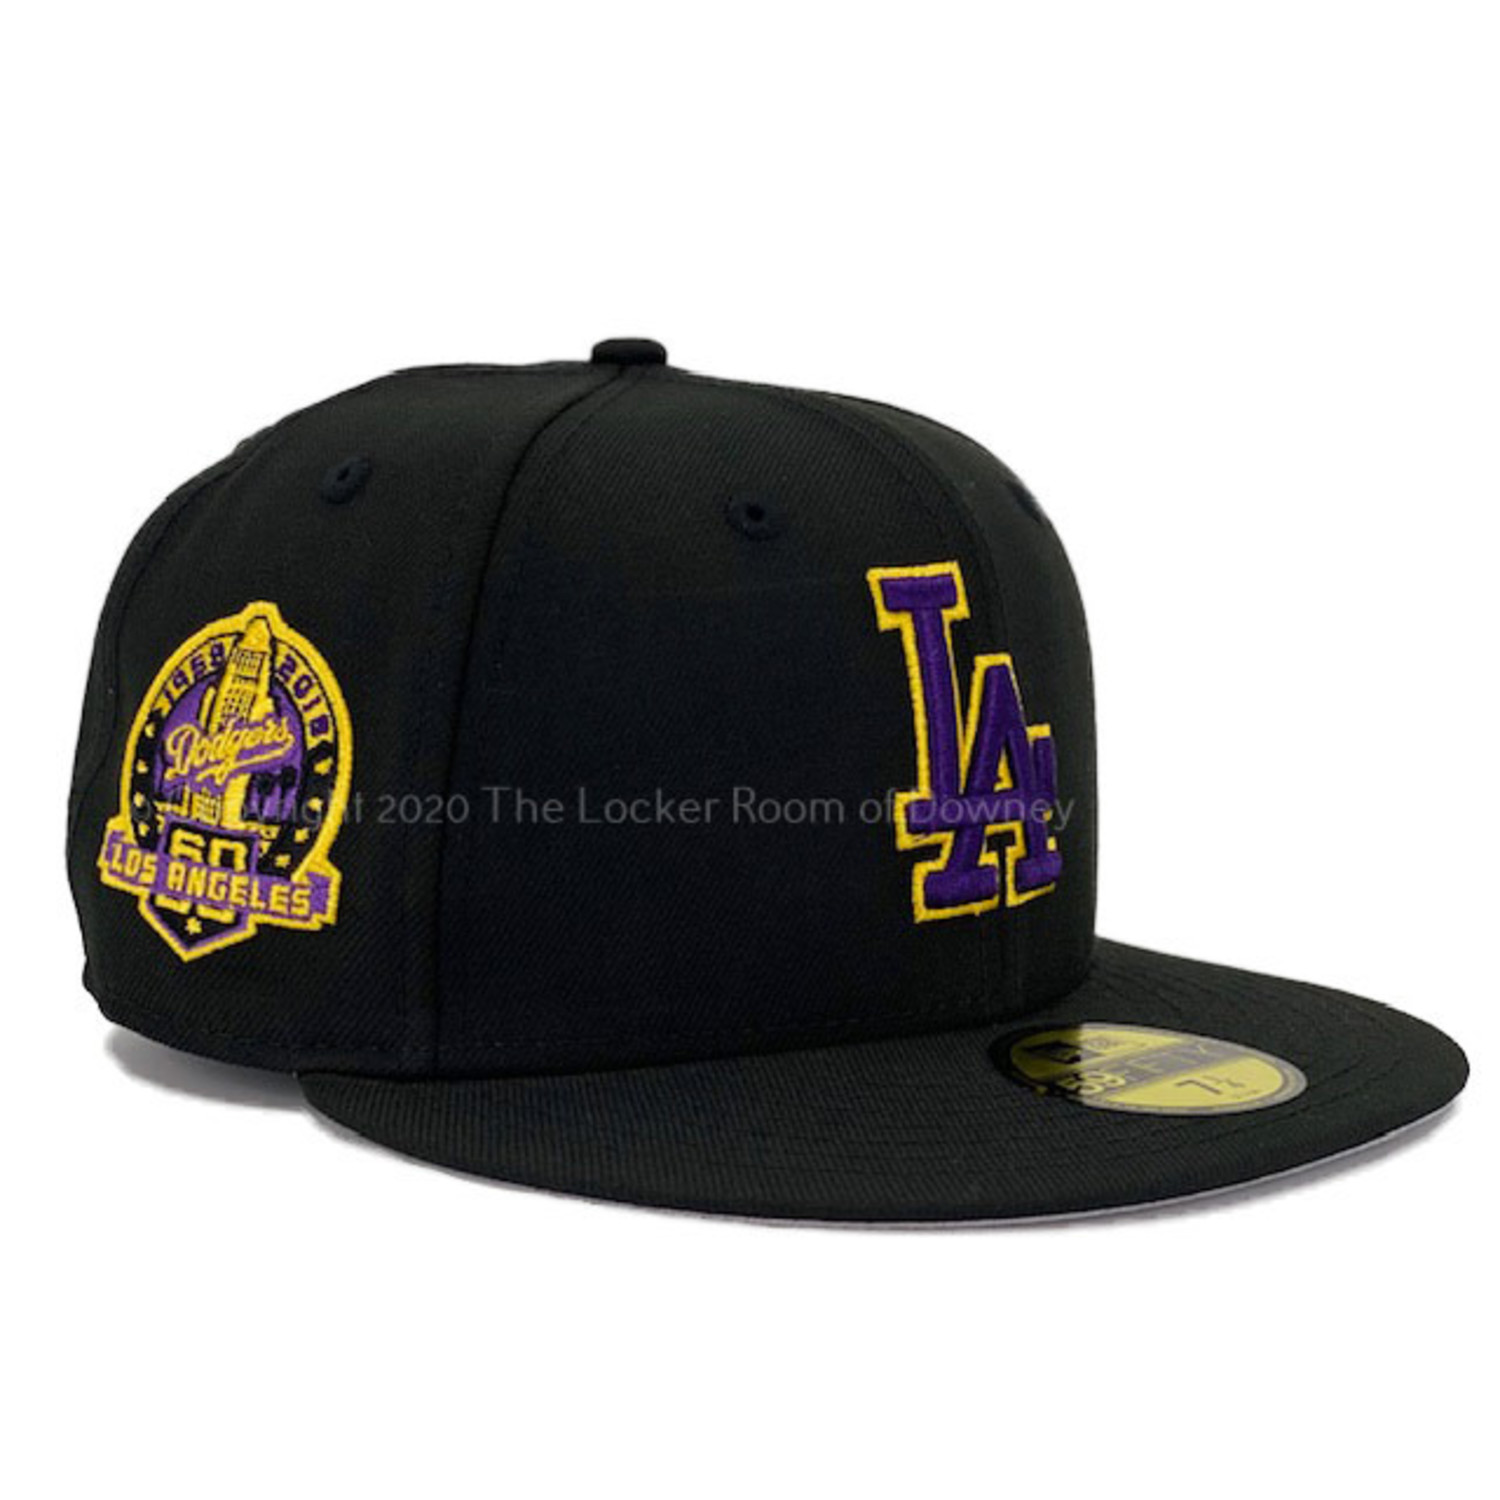 LA Black/Purple Gold UV - The Locker Room of Downey